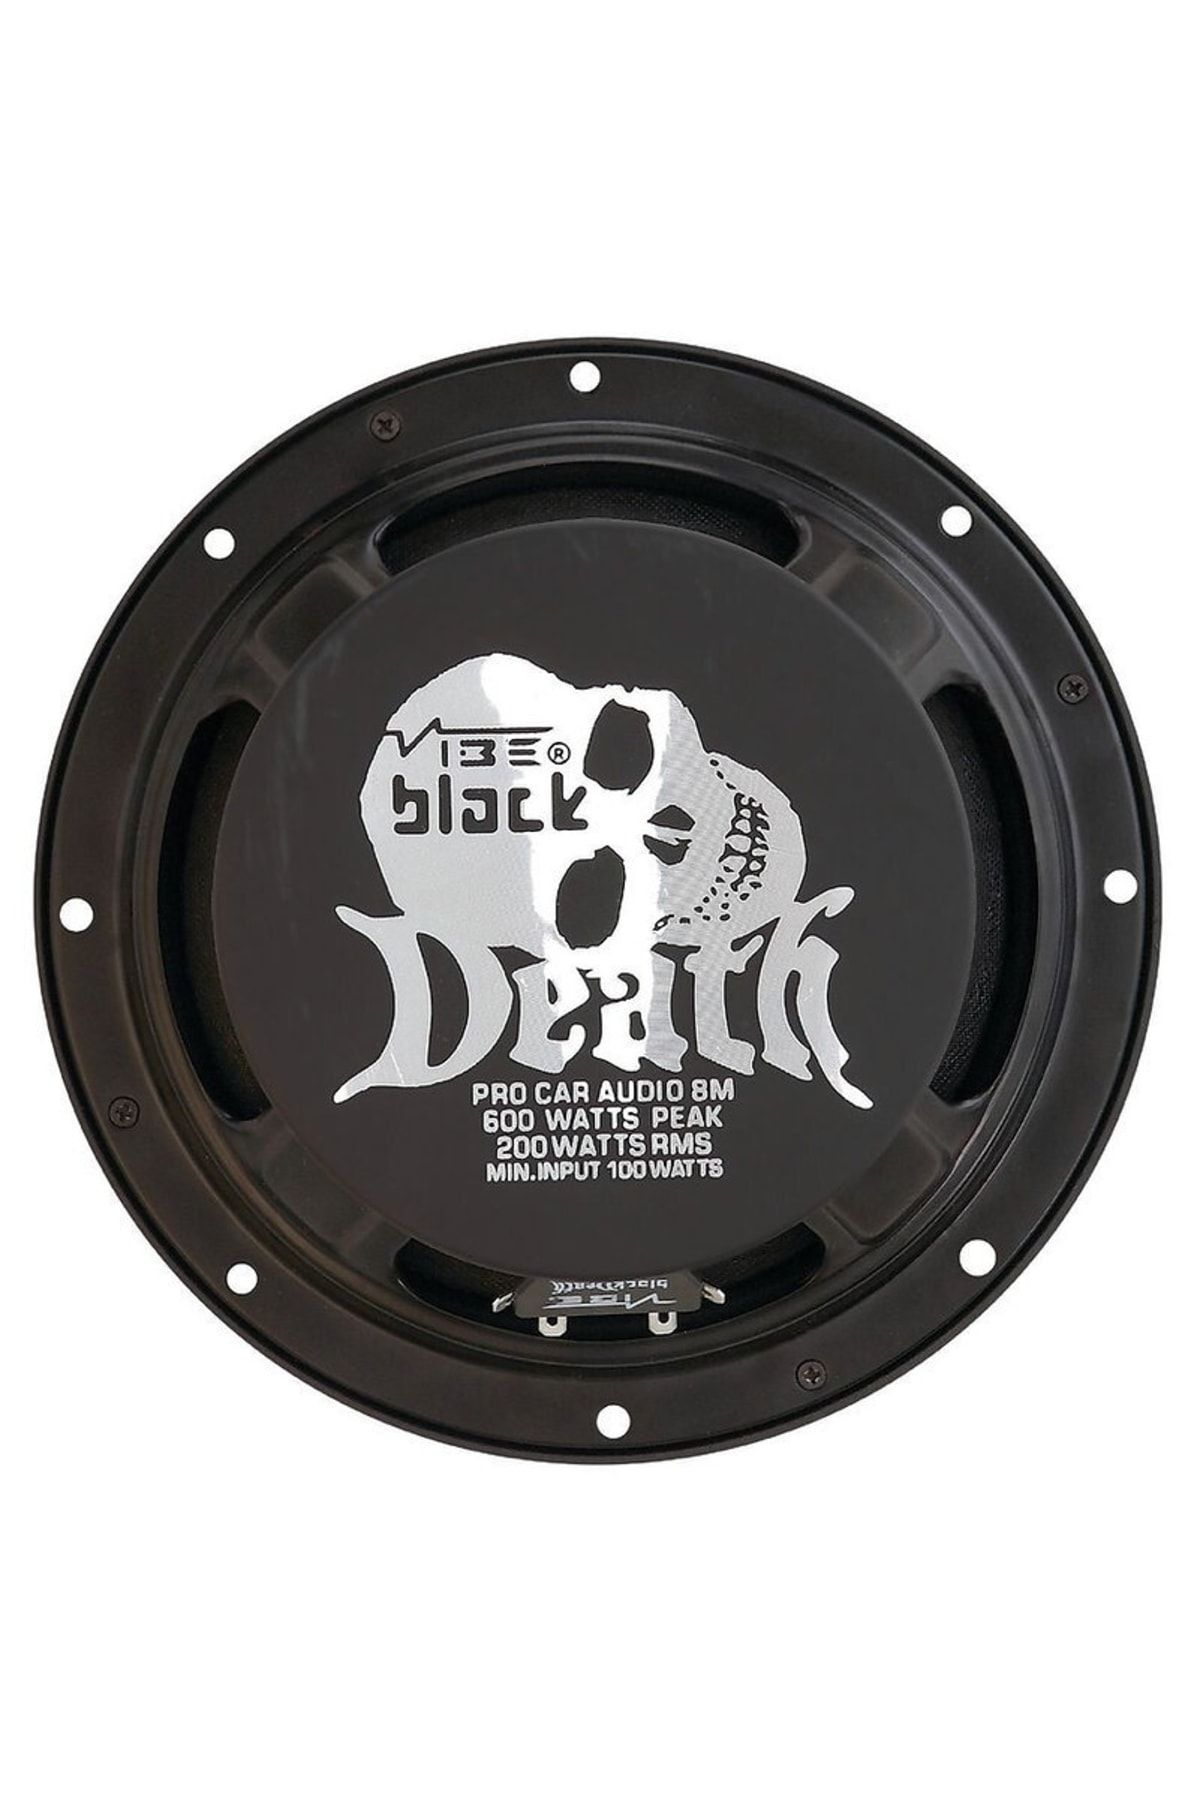 Vibe sound. Автомобильная акустика Vibe BLACKDEATH Pro 8m. Vibe bdpro8m динамики. Автомобильная акустика Vibe BLACKDEATH Pro 12. Колонки Vibe Black Death BQ 96.